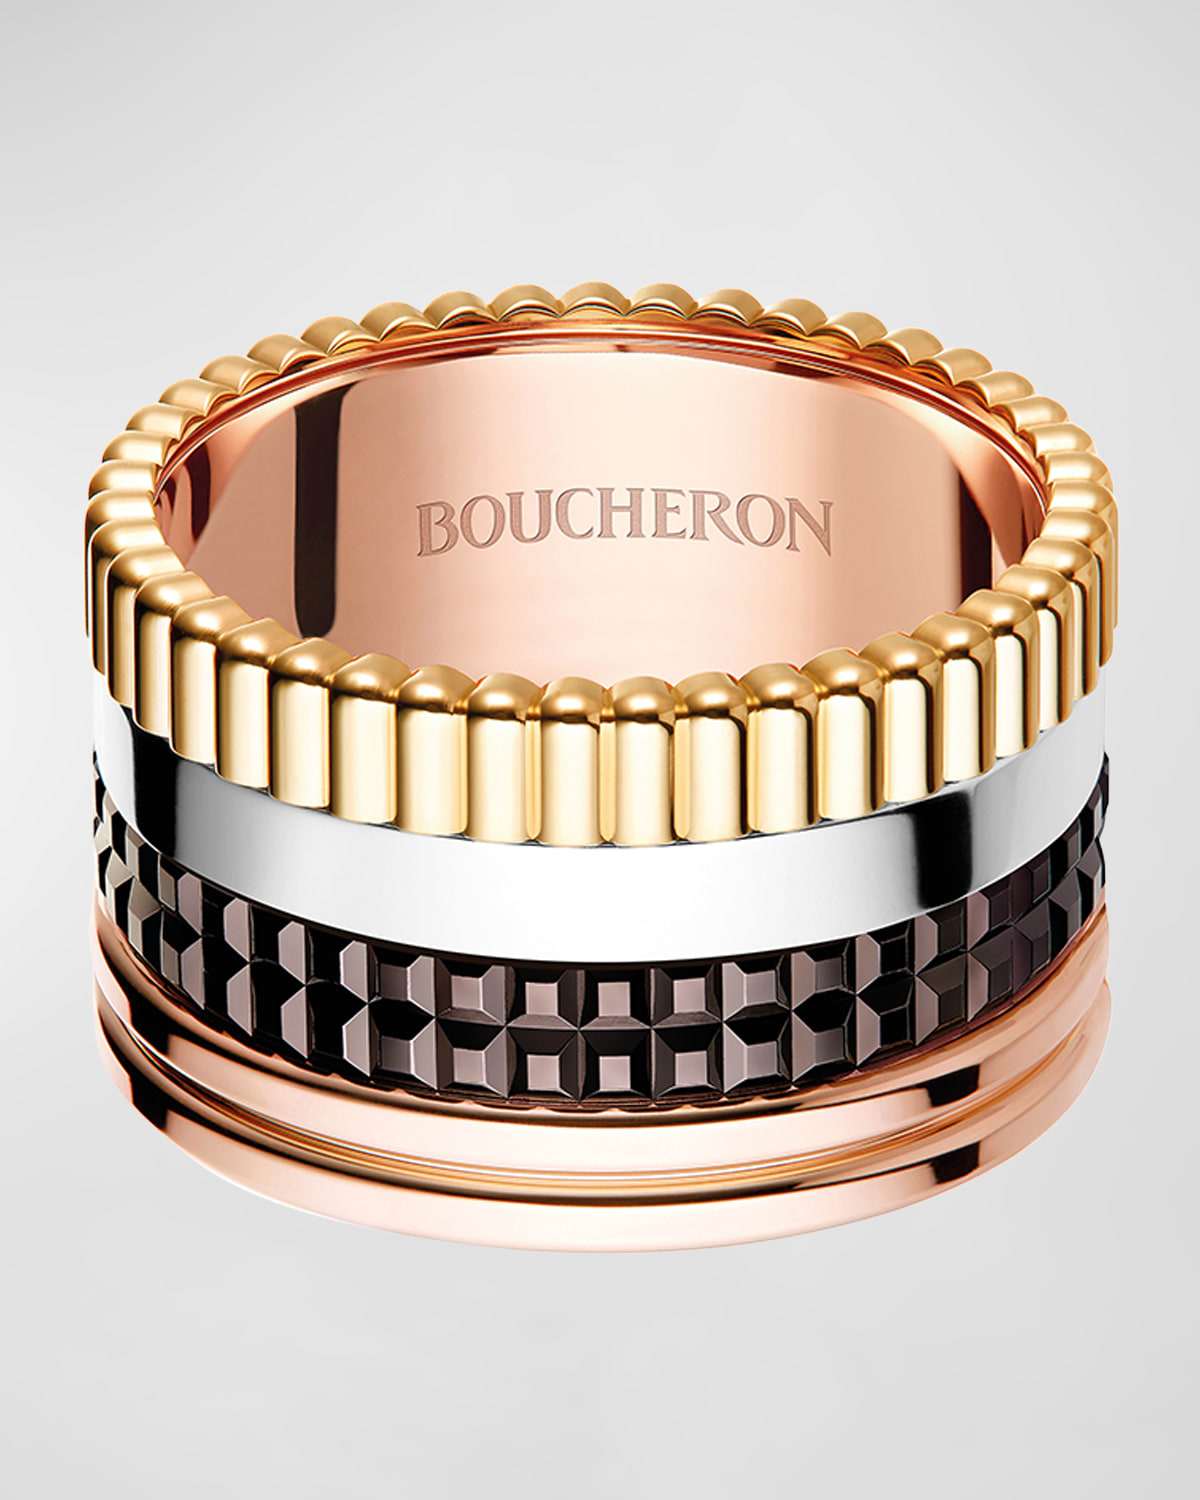 Boucheron Classic Quatre Gold Large Band Ring, Size 55